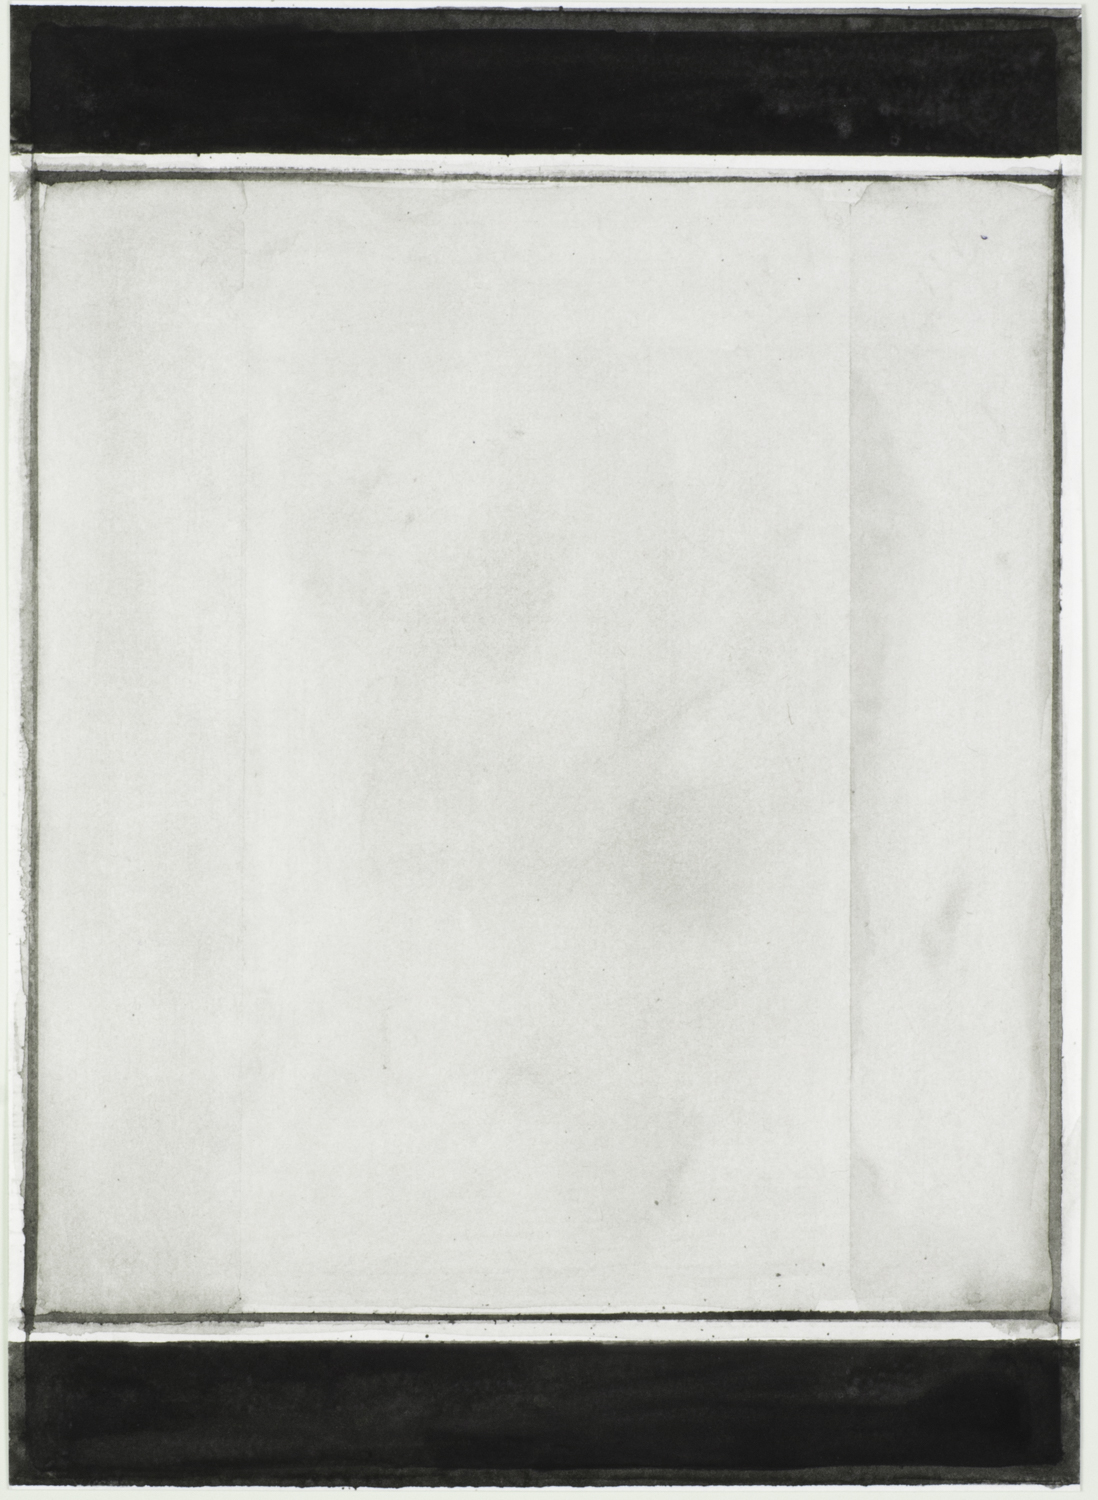 Pius Fox, (Untitled PF 14-108), Watercolour on paper, 27.5 x 19.8 cm, 2014